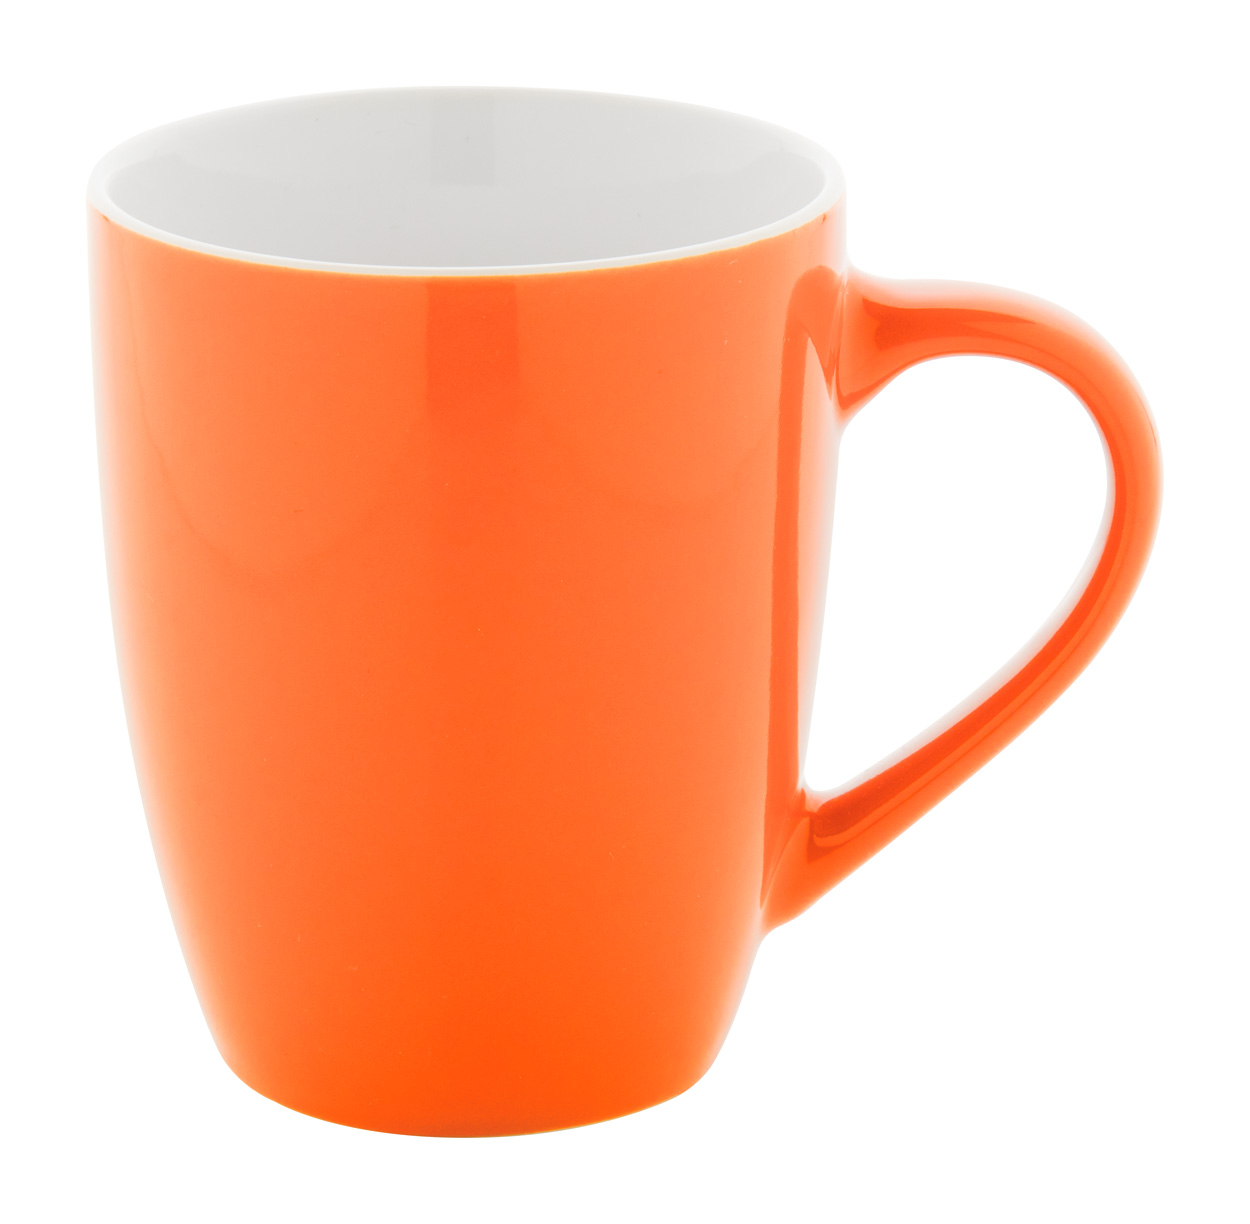 Gaia mug - orange